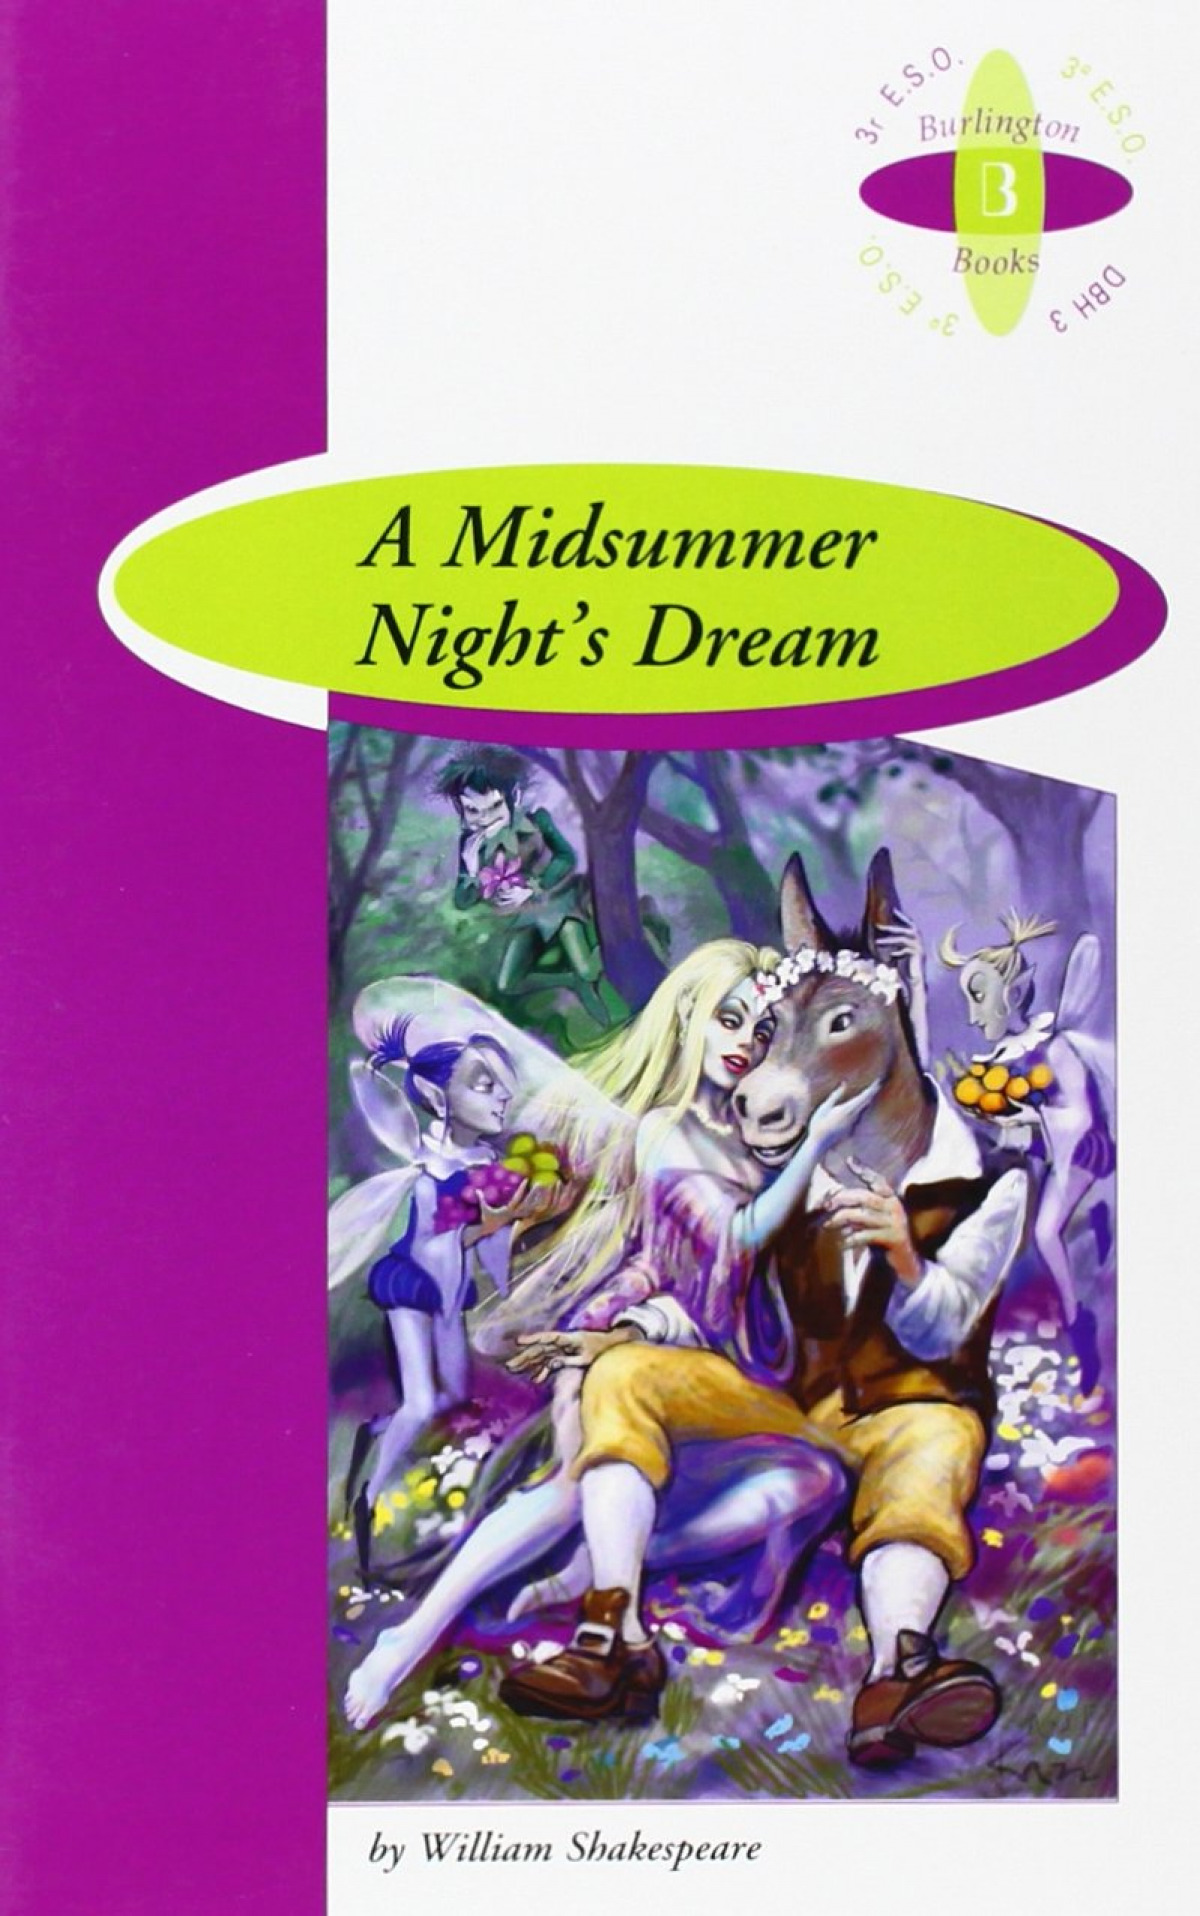 Midsummer nights dream 3 eso - William Shakespeare